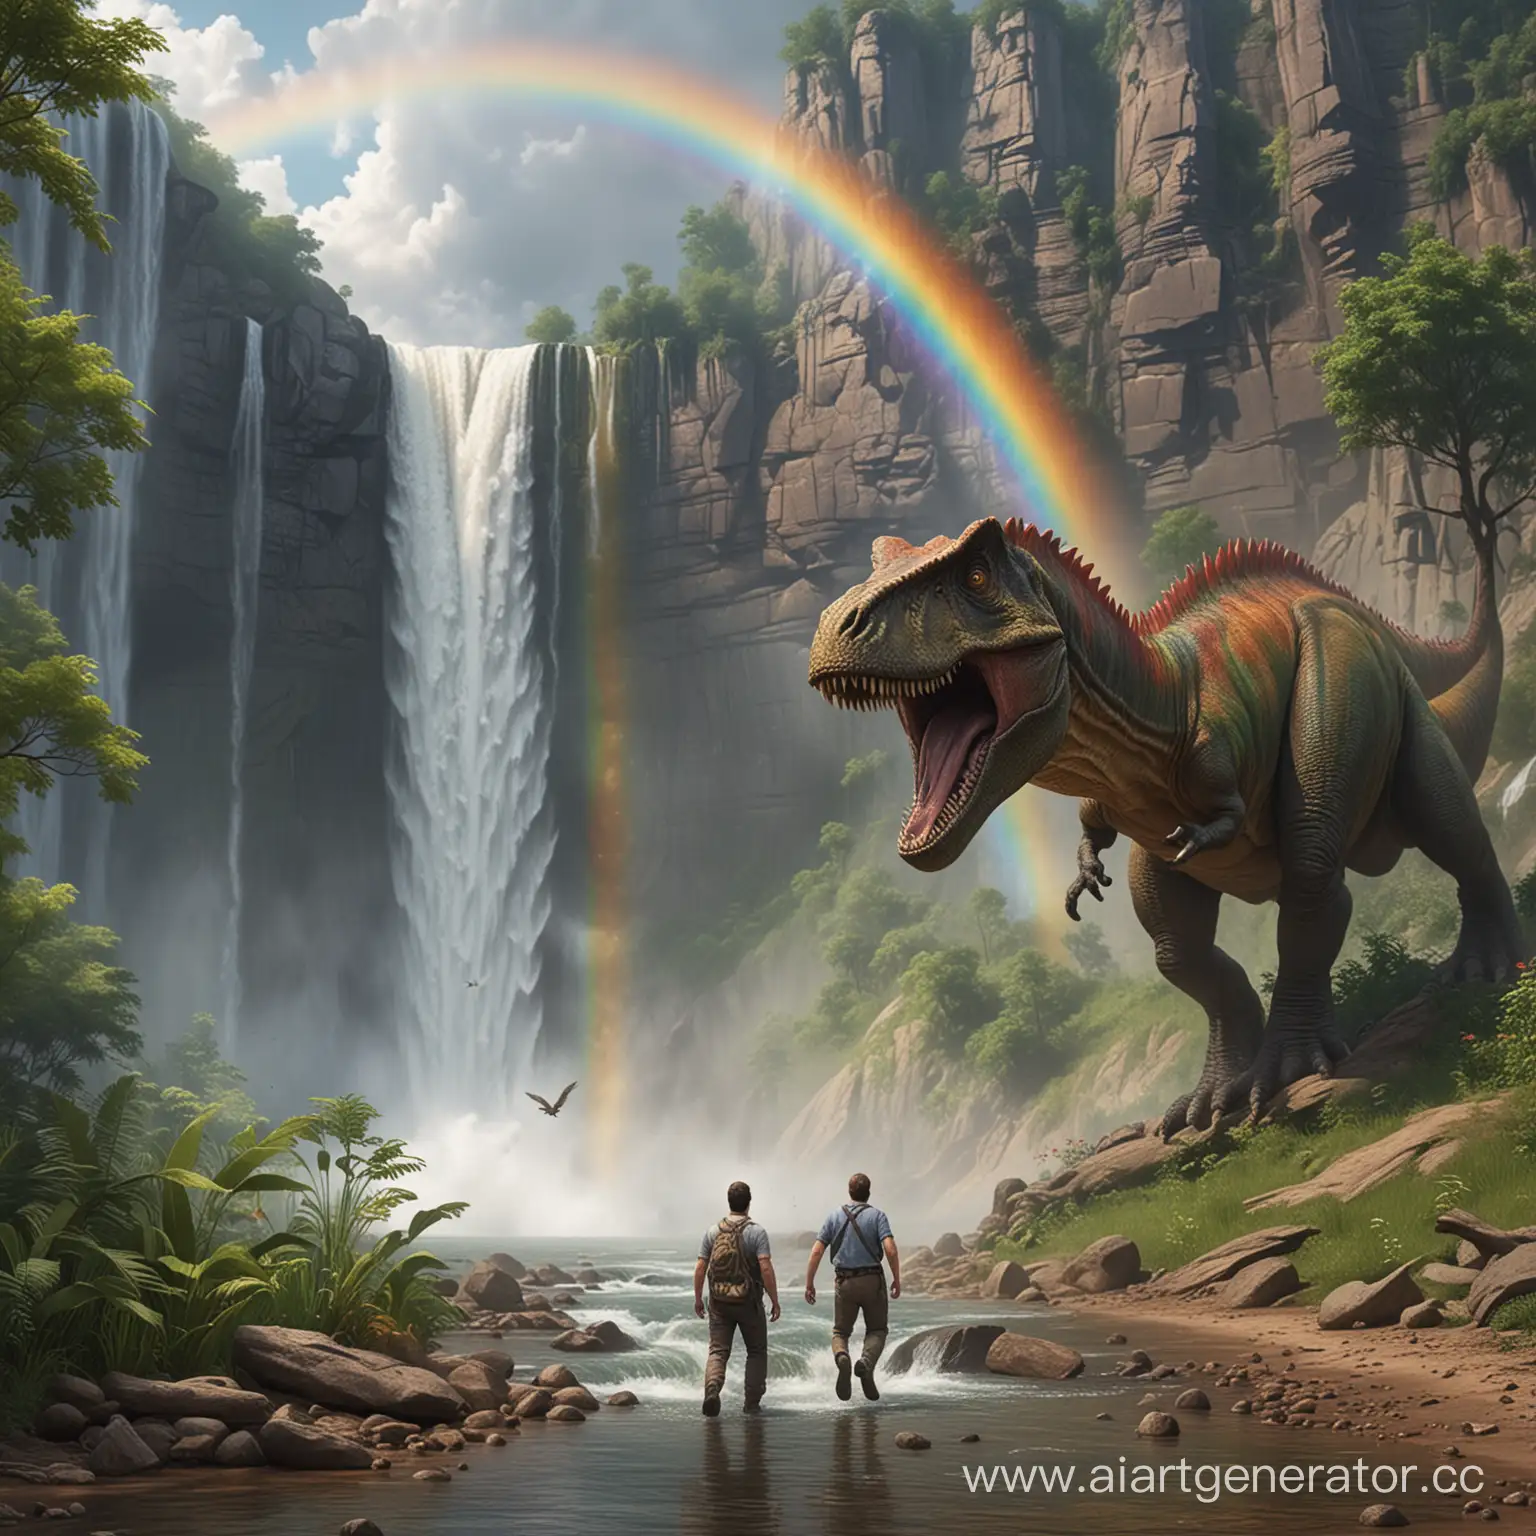 Man-Evades-Dinosaur-Near-Waterfall-with-Rainbow